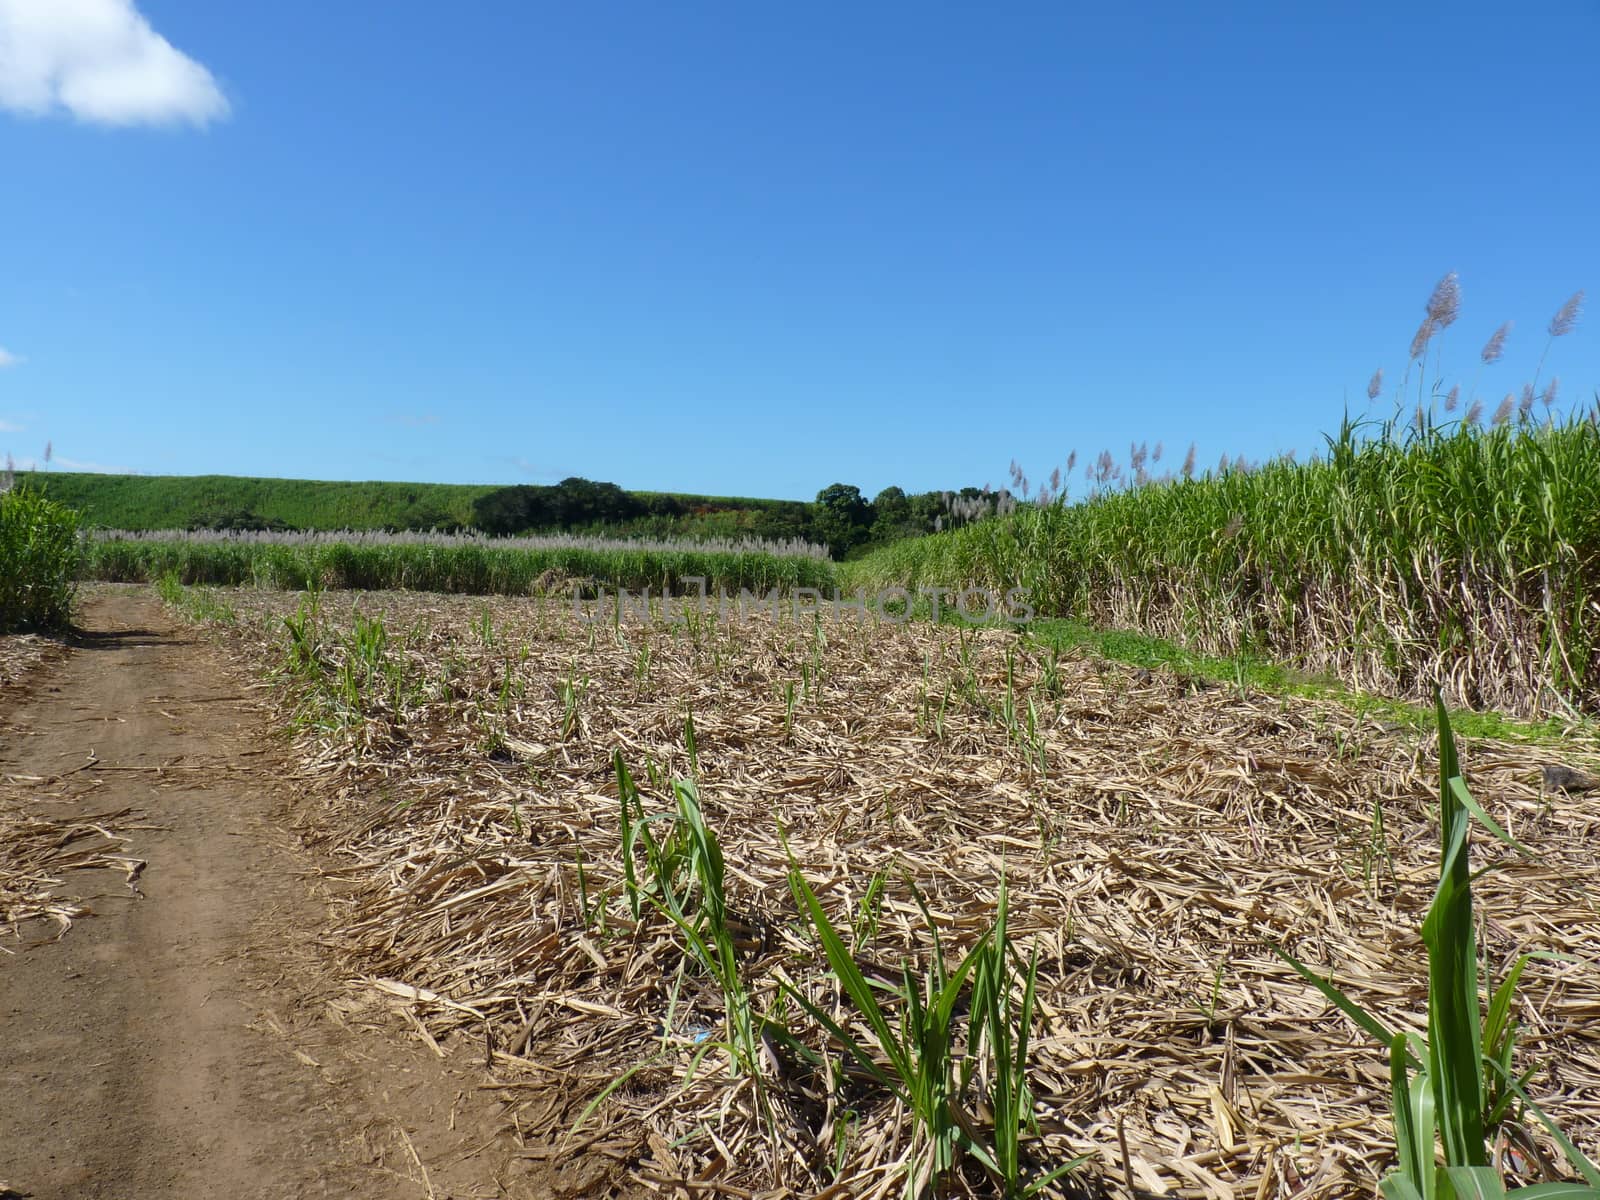 Sugar Cane Fields in Mauritius Island